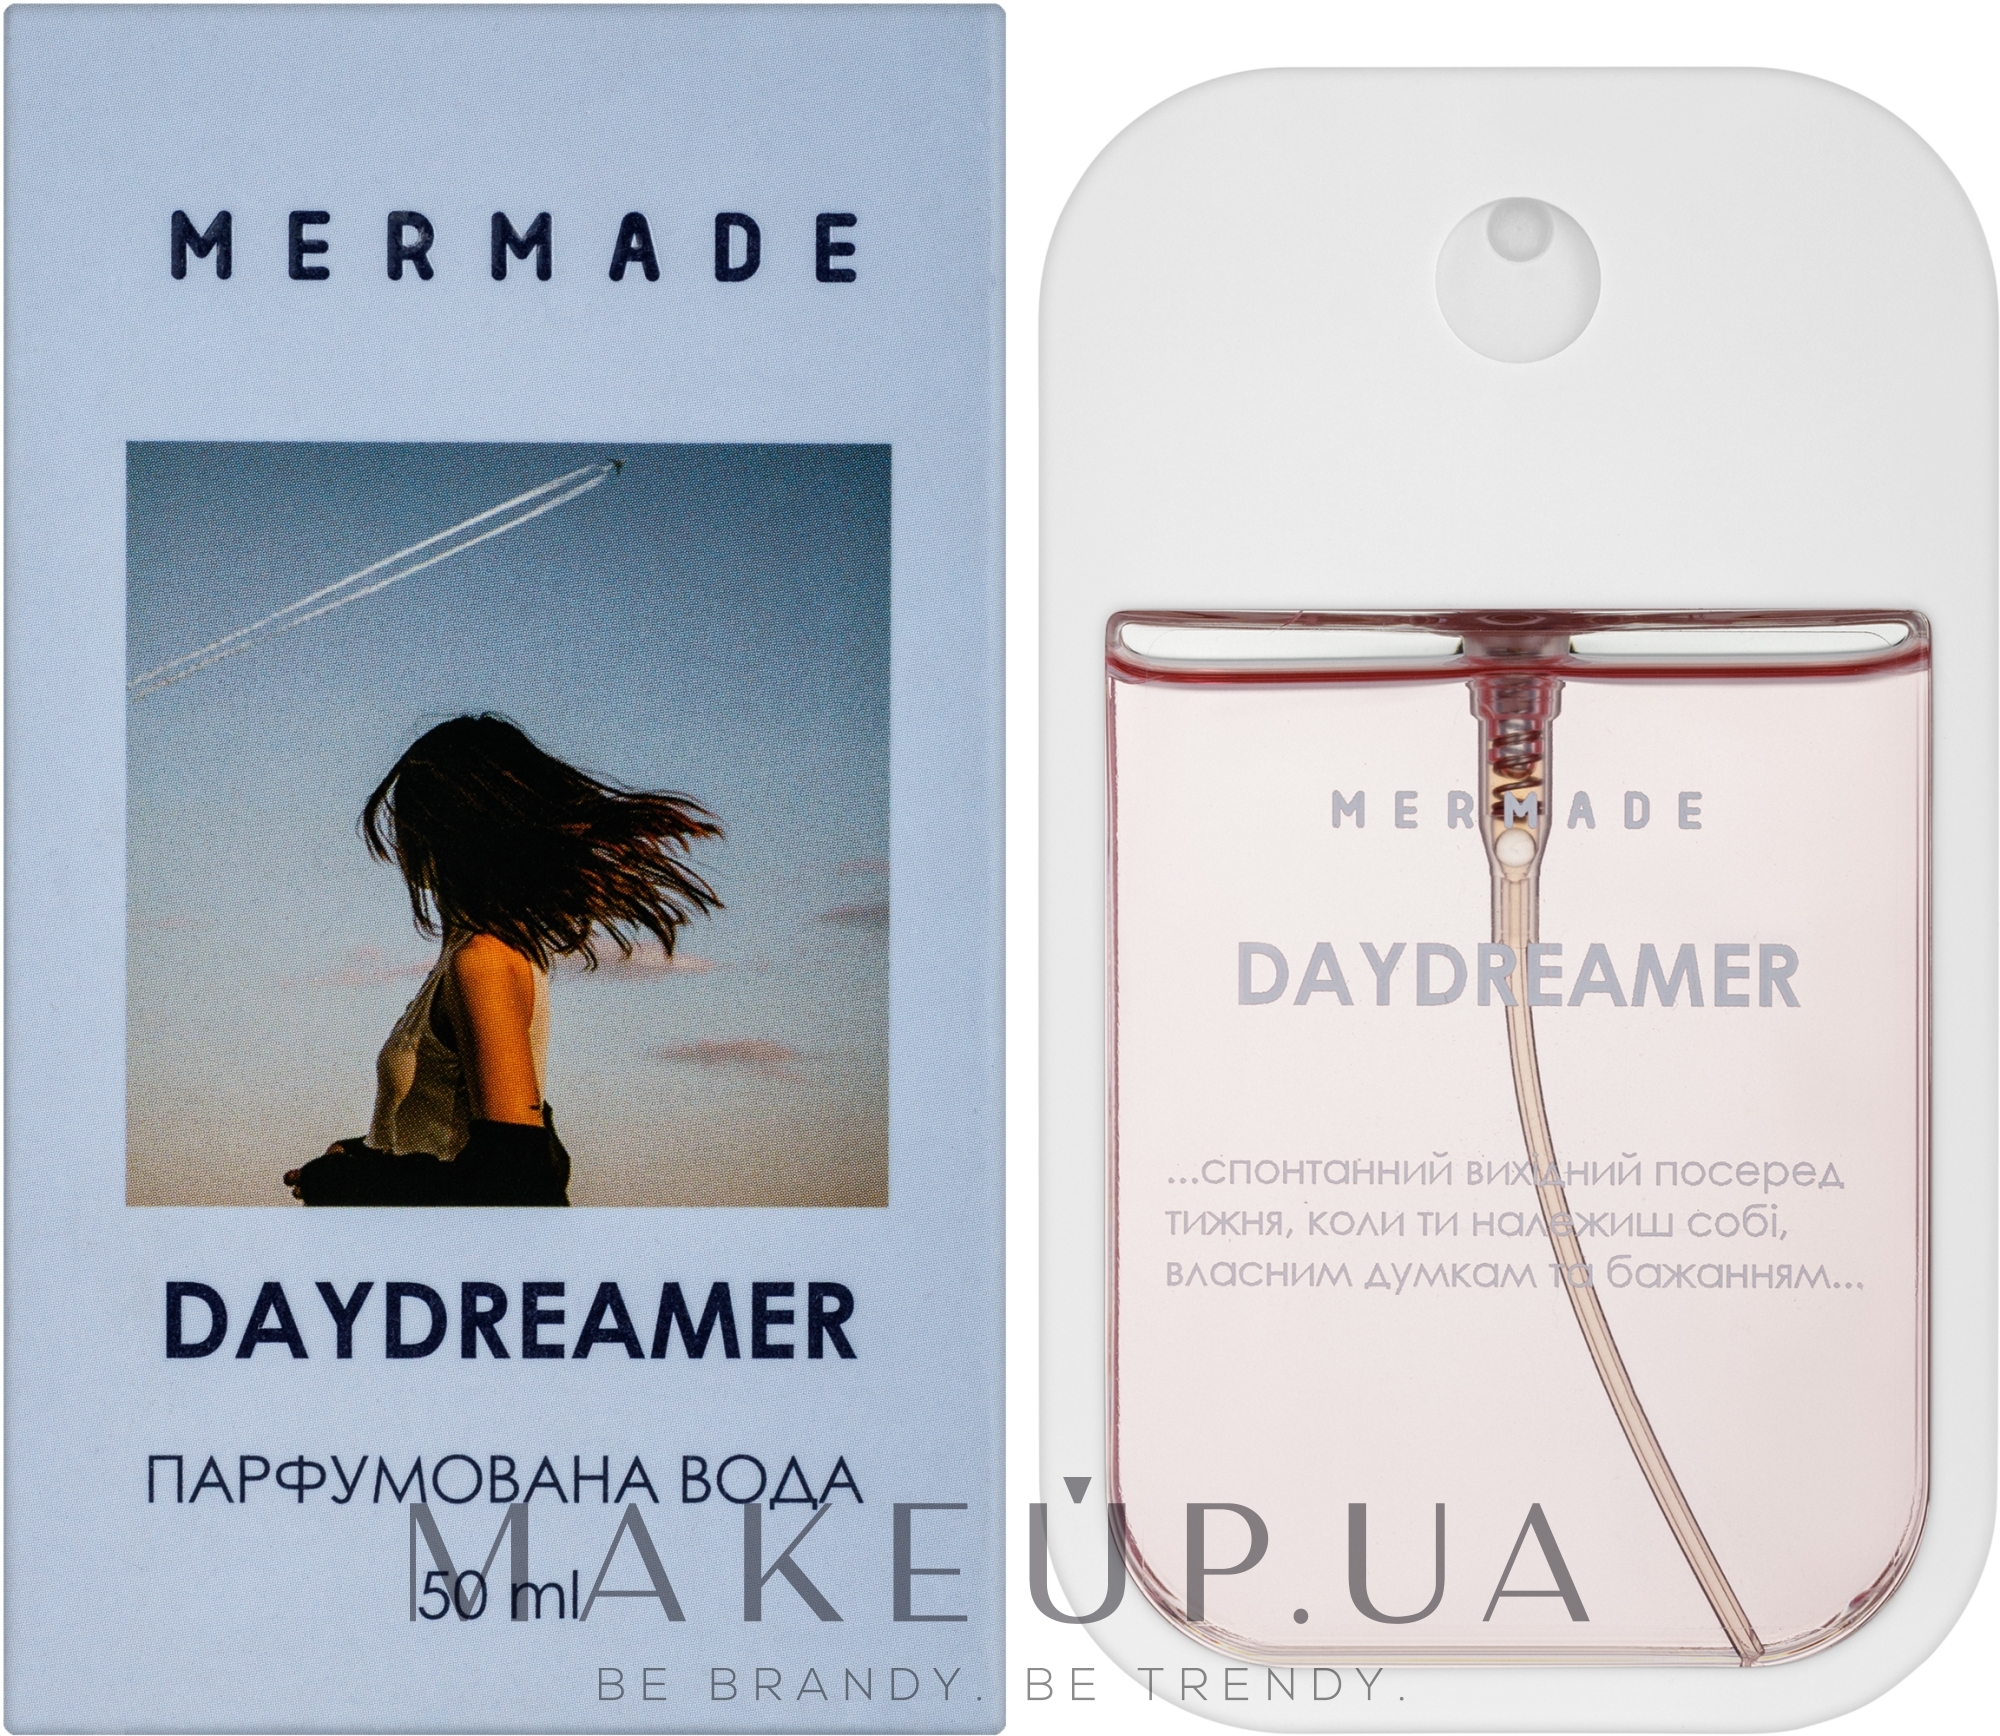 Mermade Daydreamer